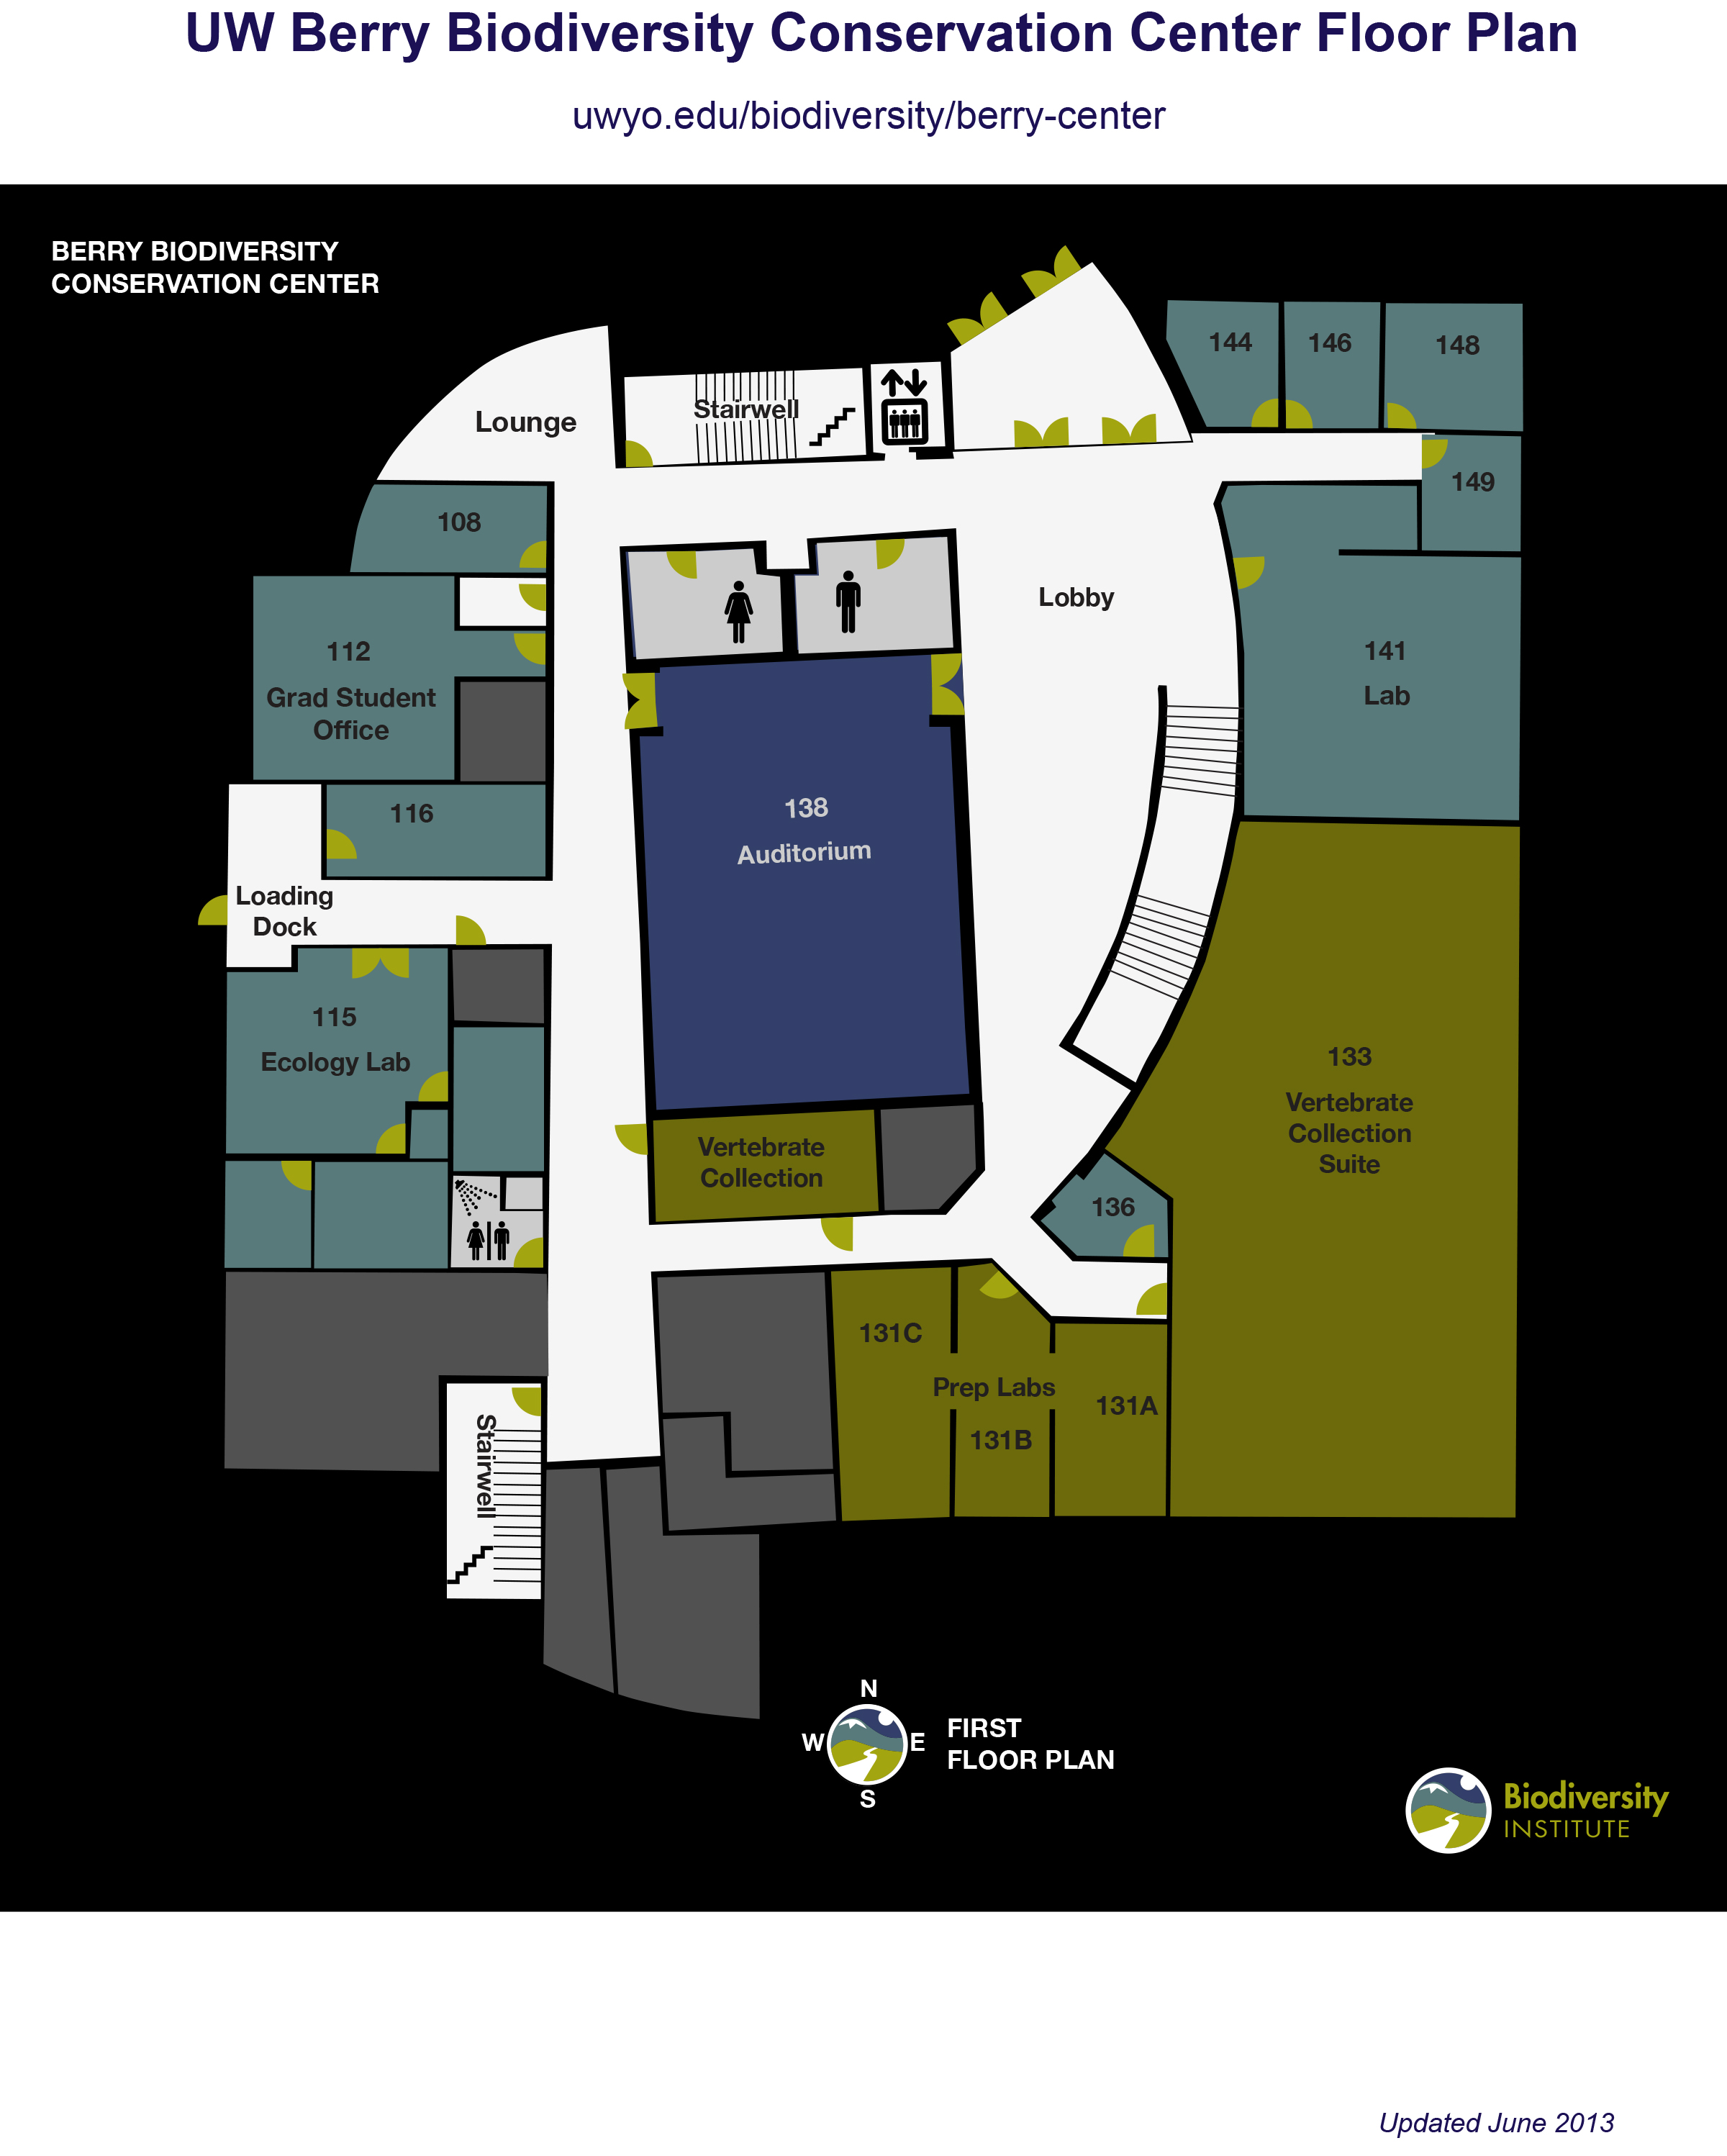 Floor Plan of first floor of Berry Biodiversity Conservation Center